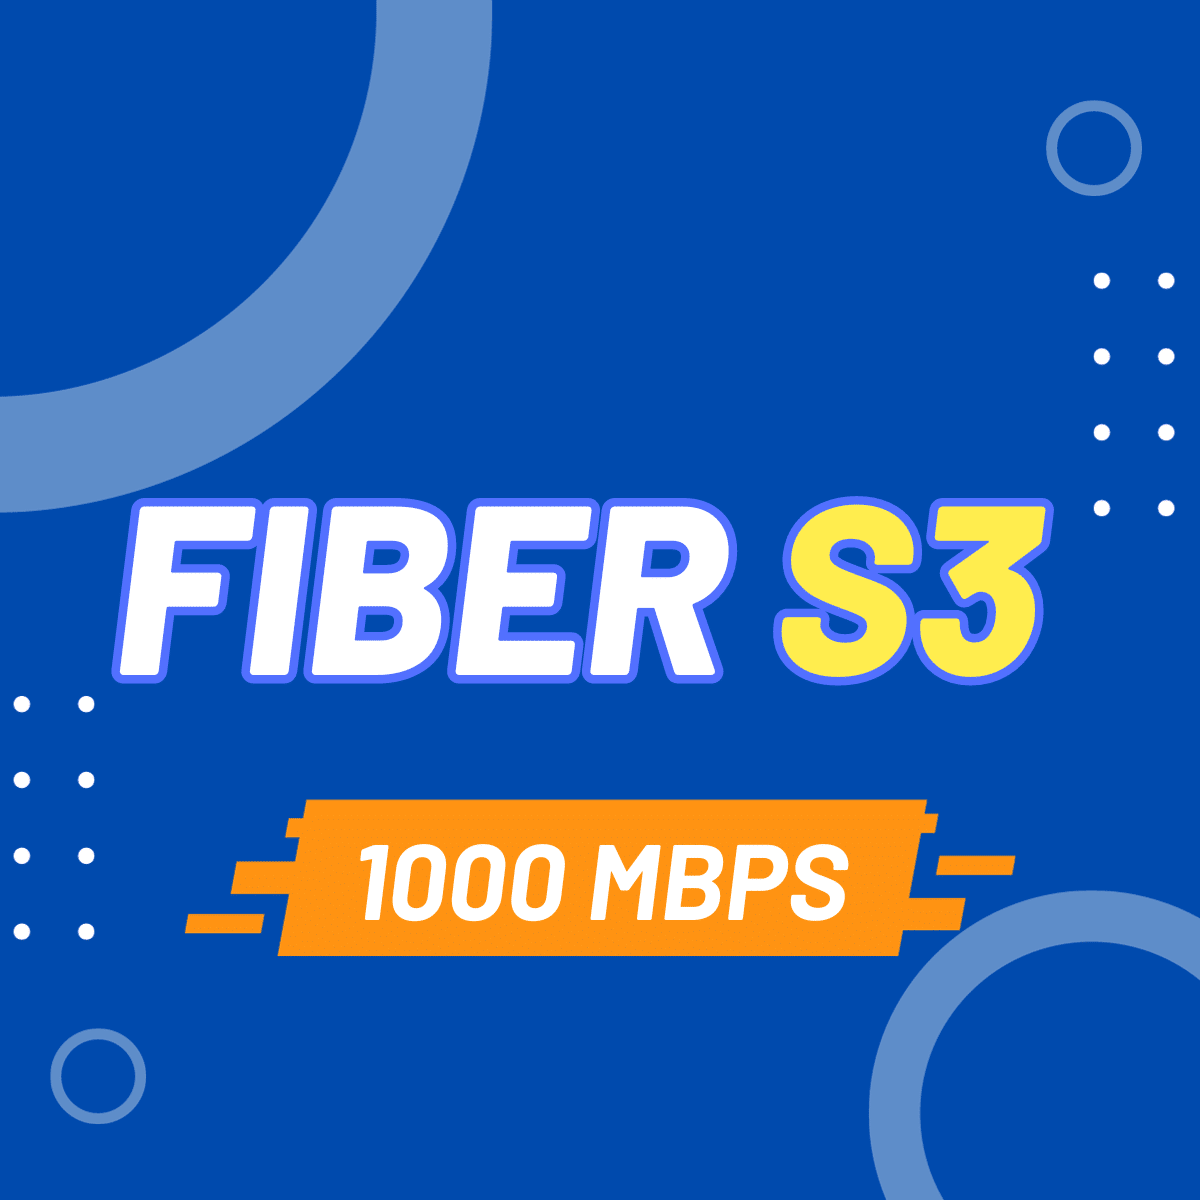 Fiber S3, fibers3